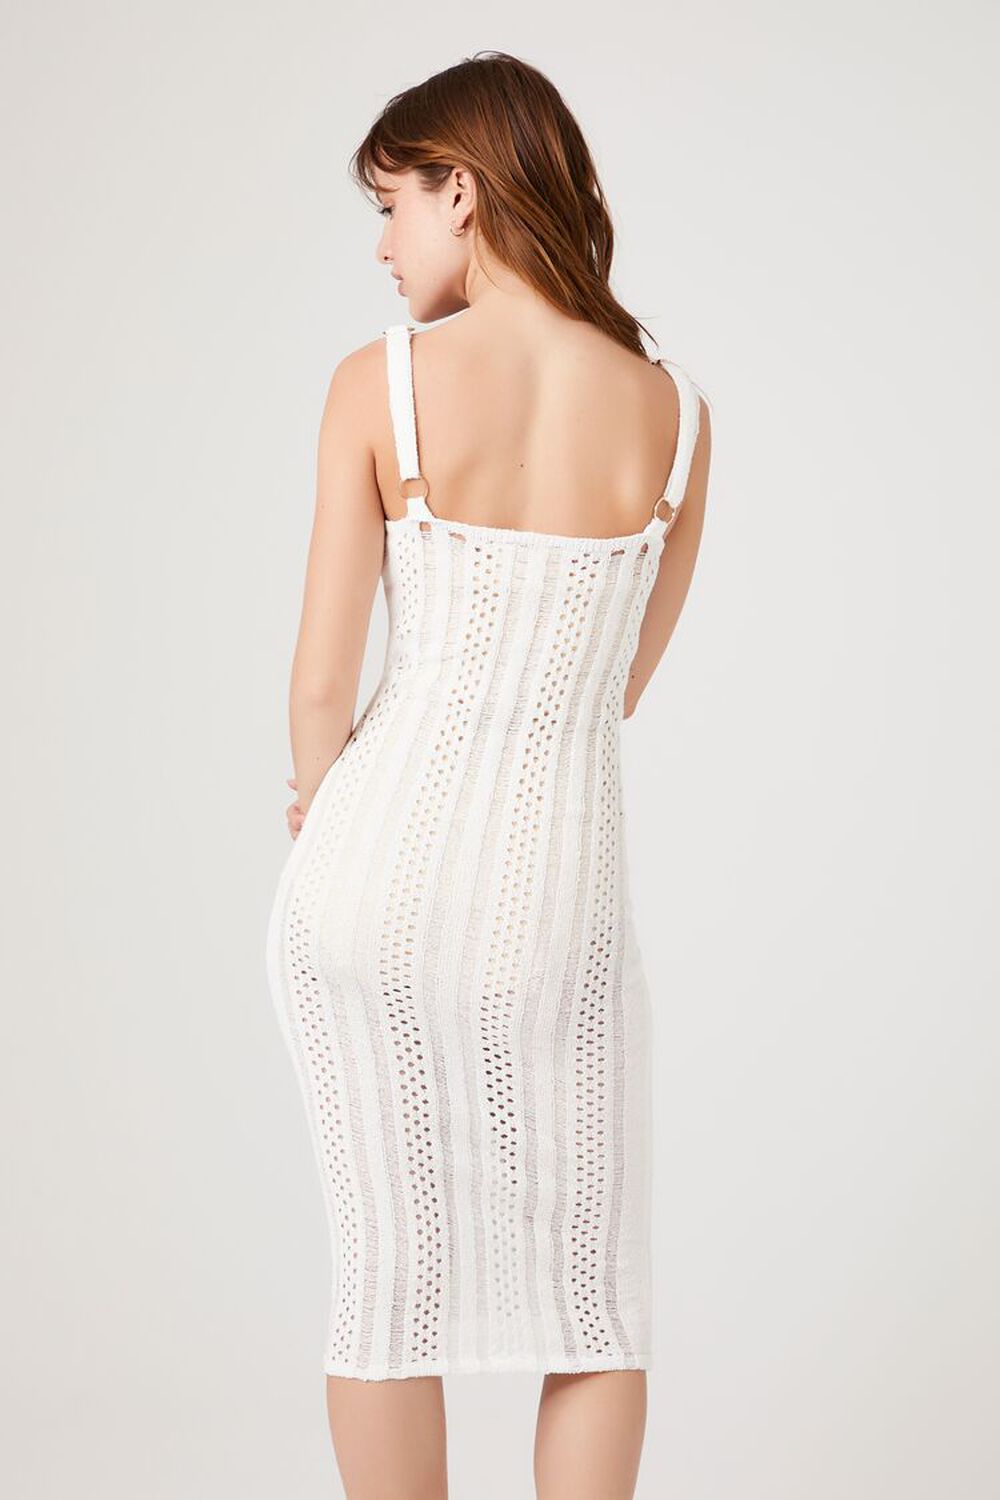 WHITE Sheer Crochet Bodycon Midi Dress, image 3